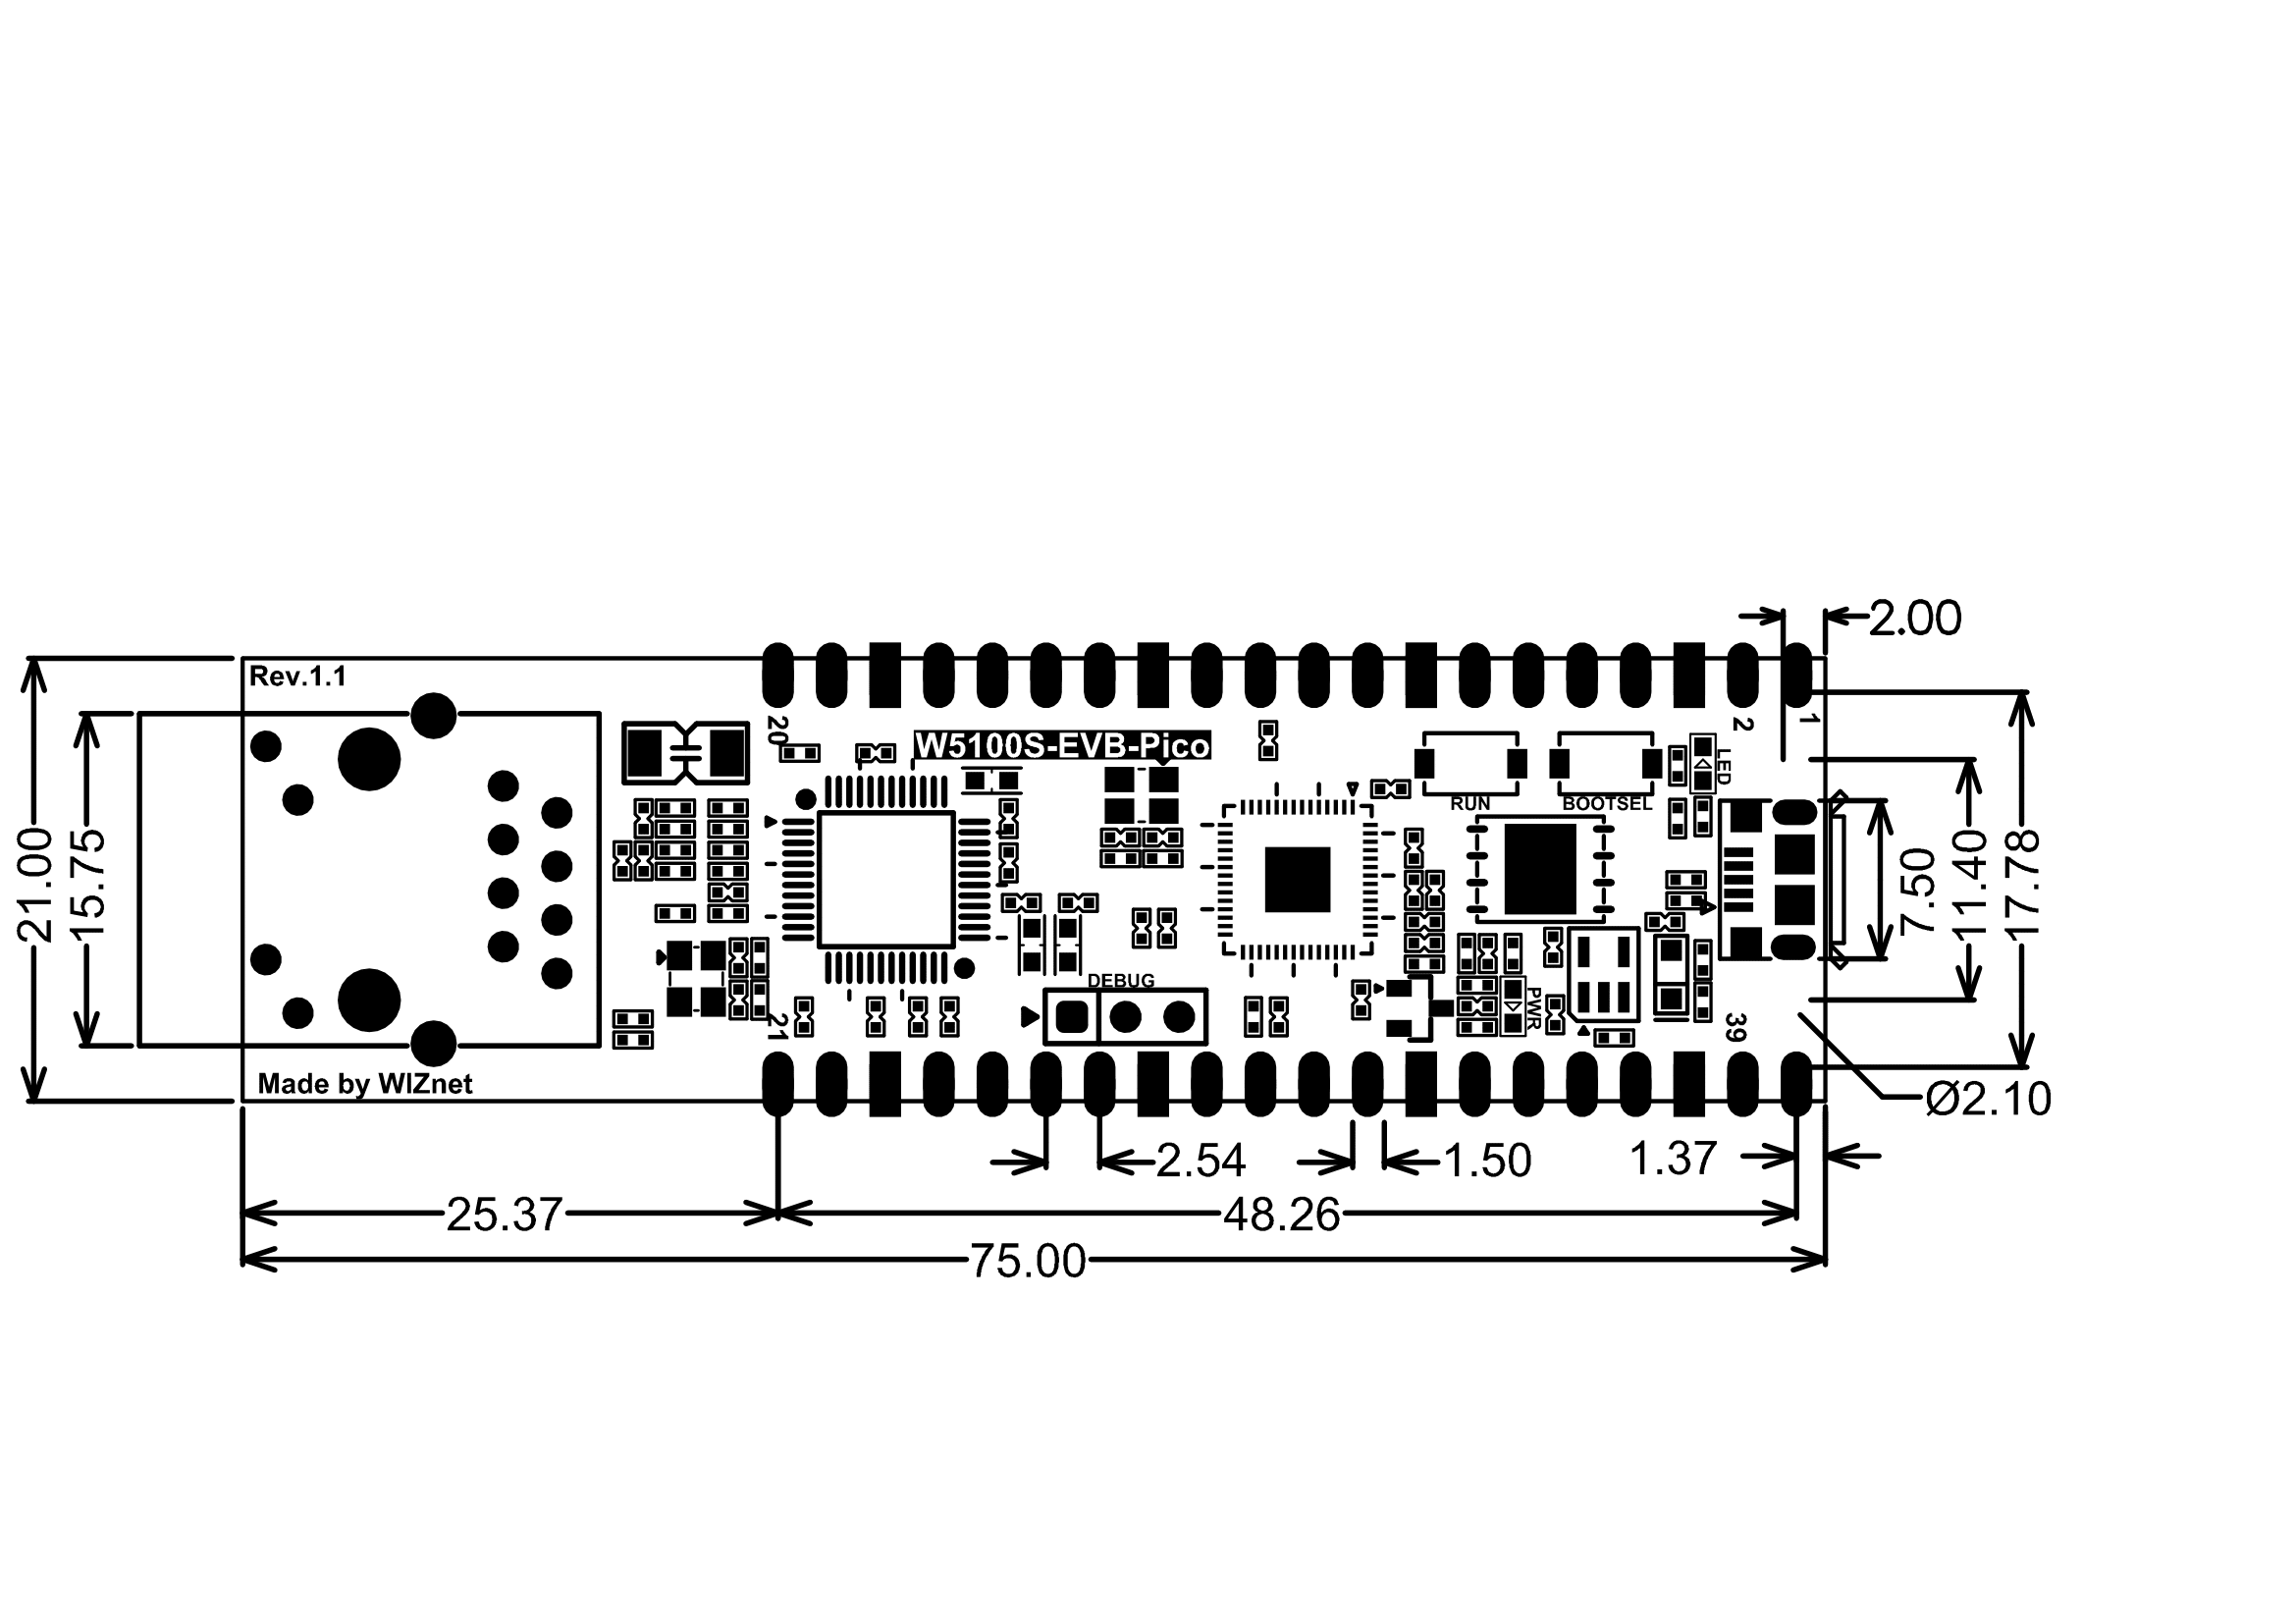 W5100S-EVB-RP2040_Dimension